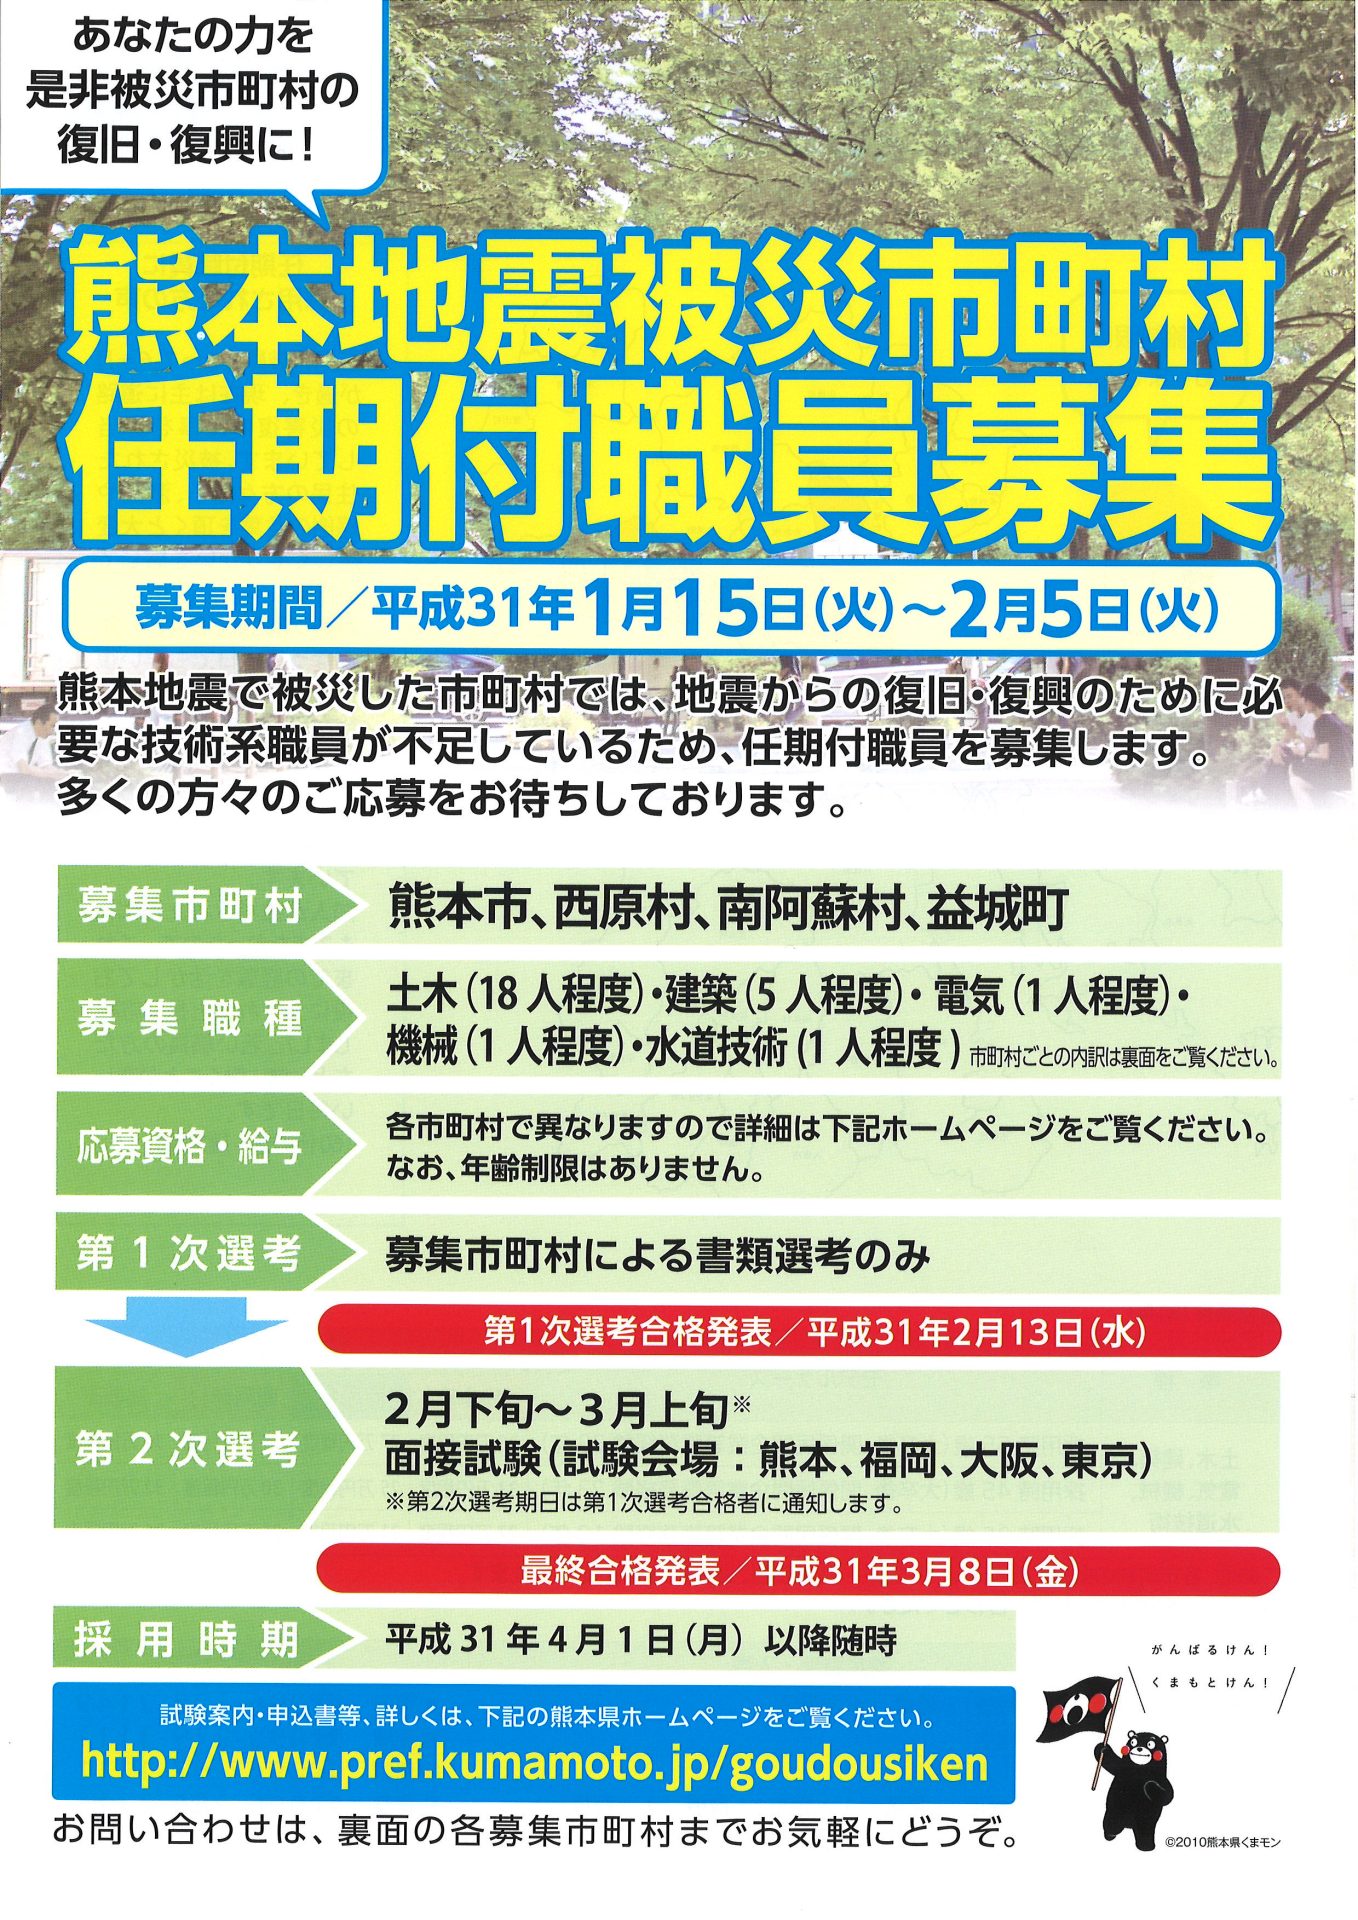 熊本地震被災市町村 任期付職員募集 | 地域のトピックス